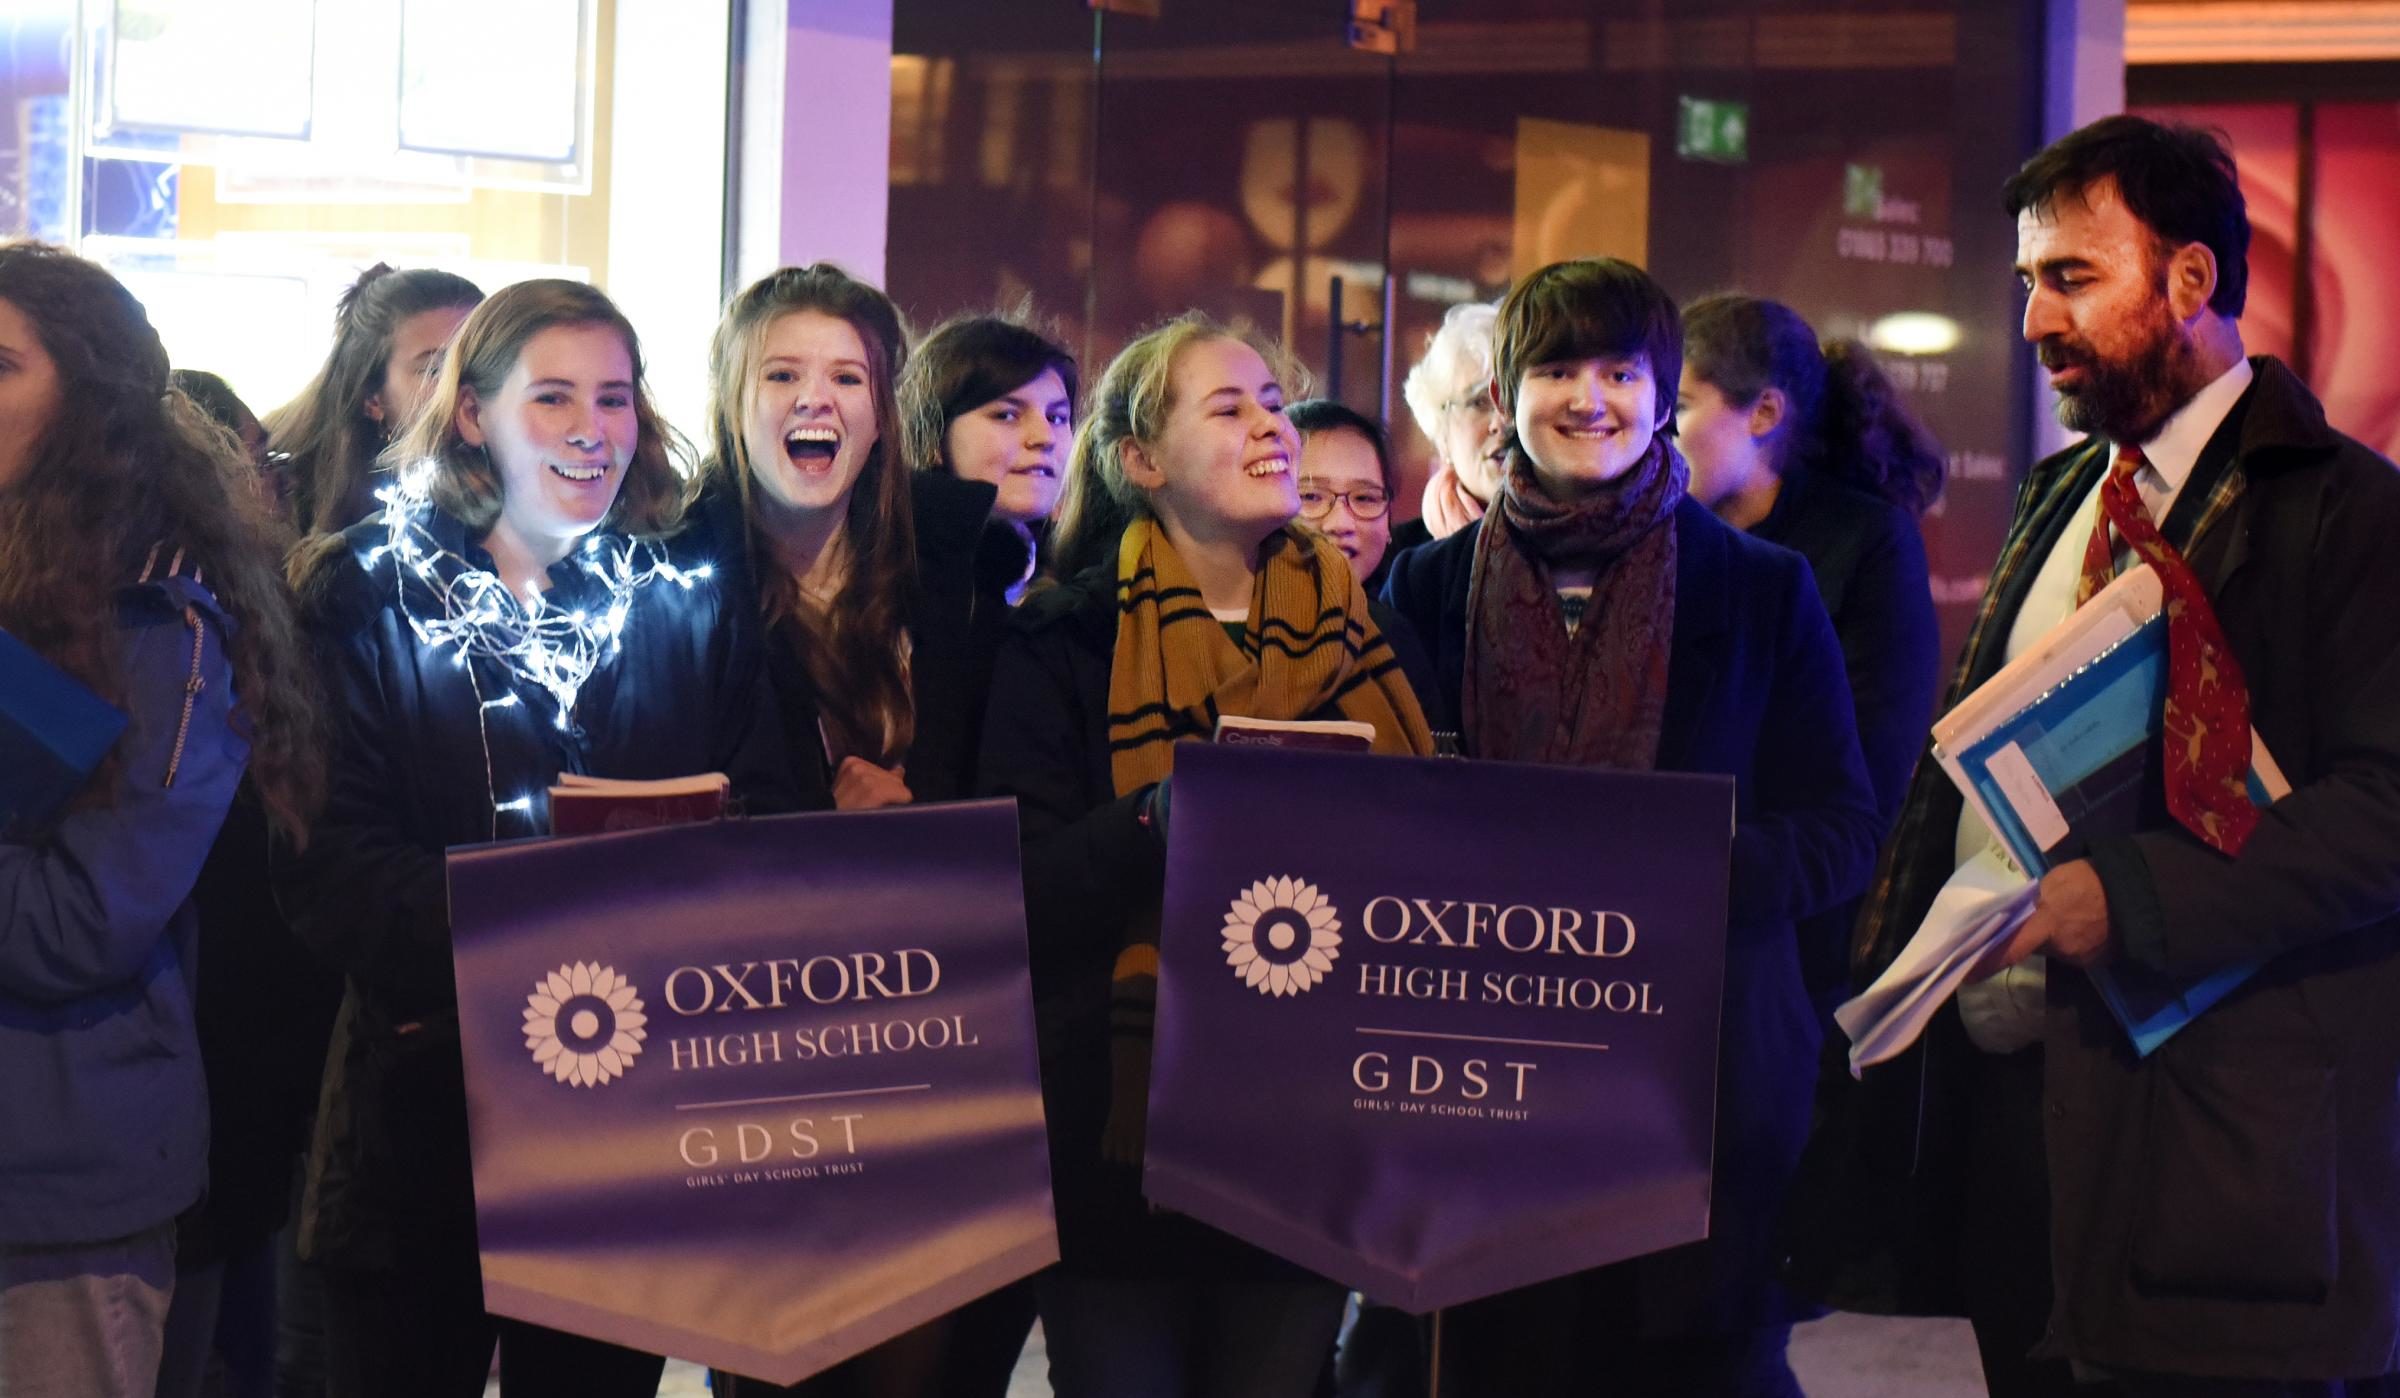 The Oxford Development Fund Oxford High